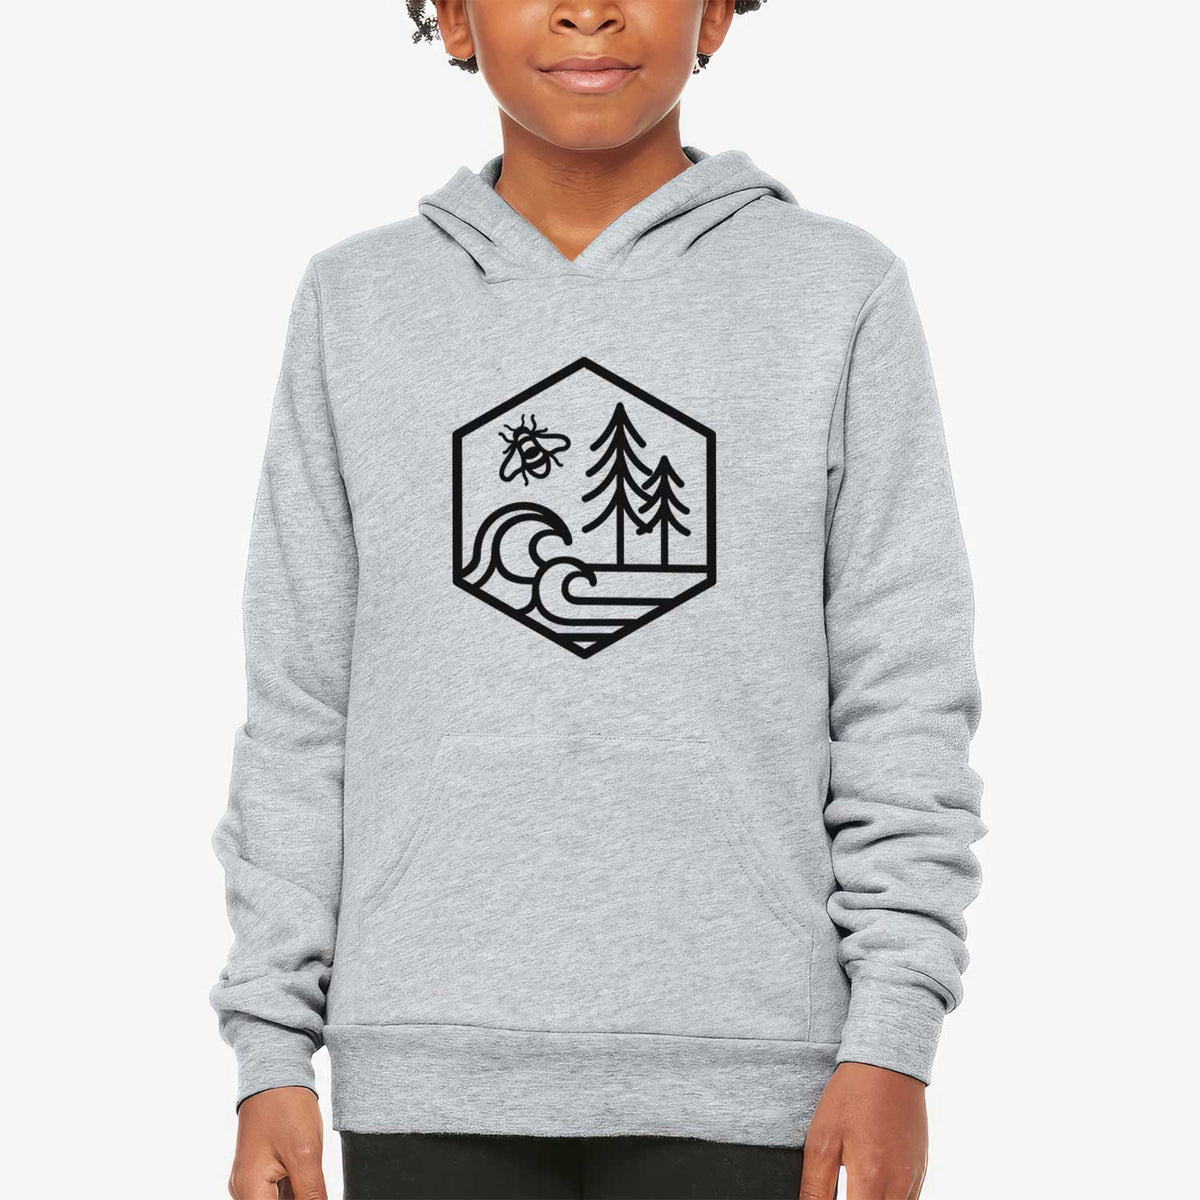 Harmonious Hexagon - Bees, Seas, Trees - Youth Hoodie Sweatshirt